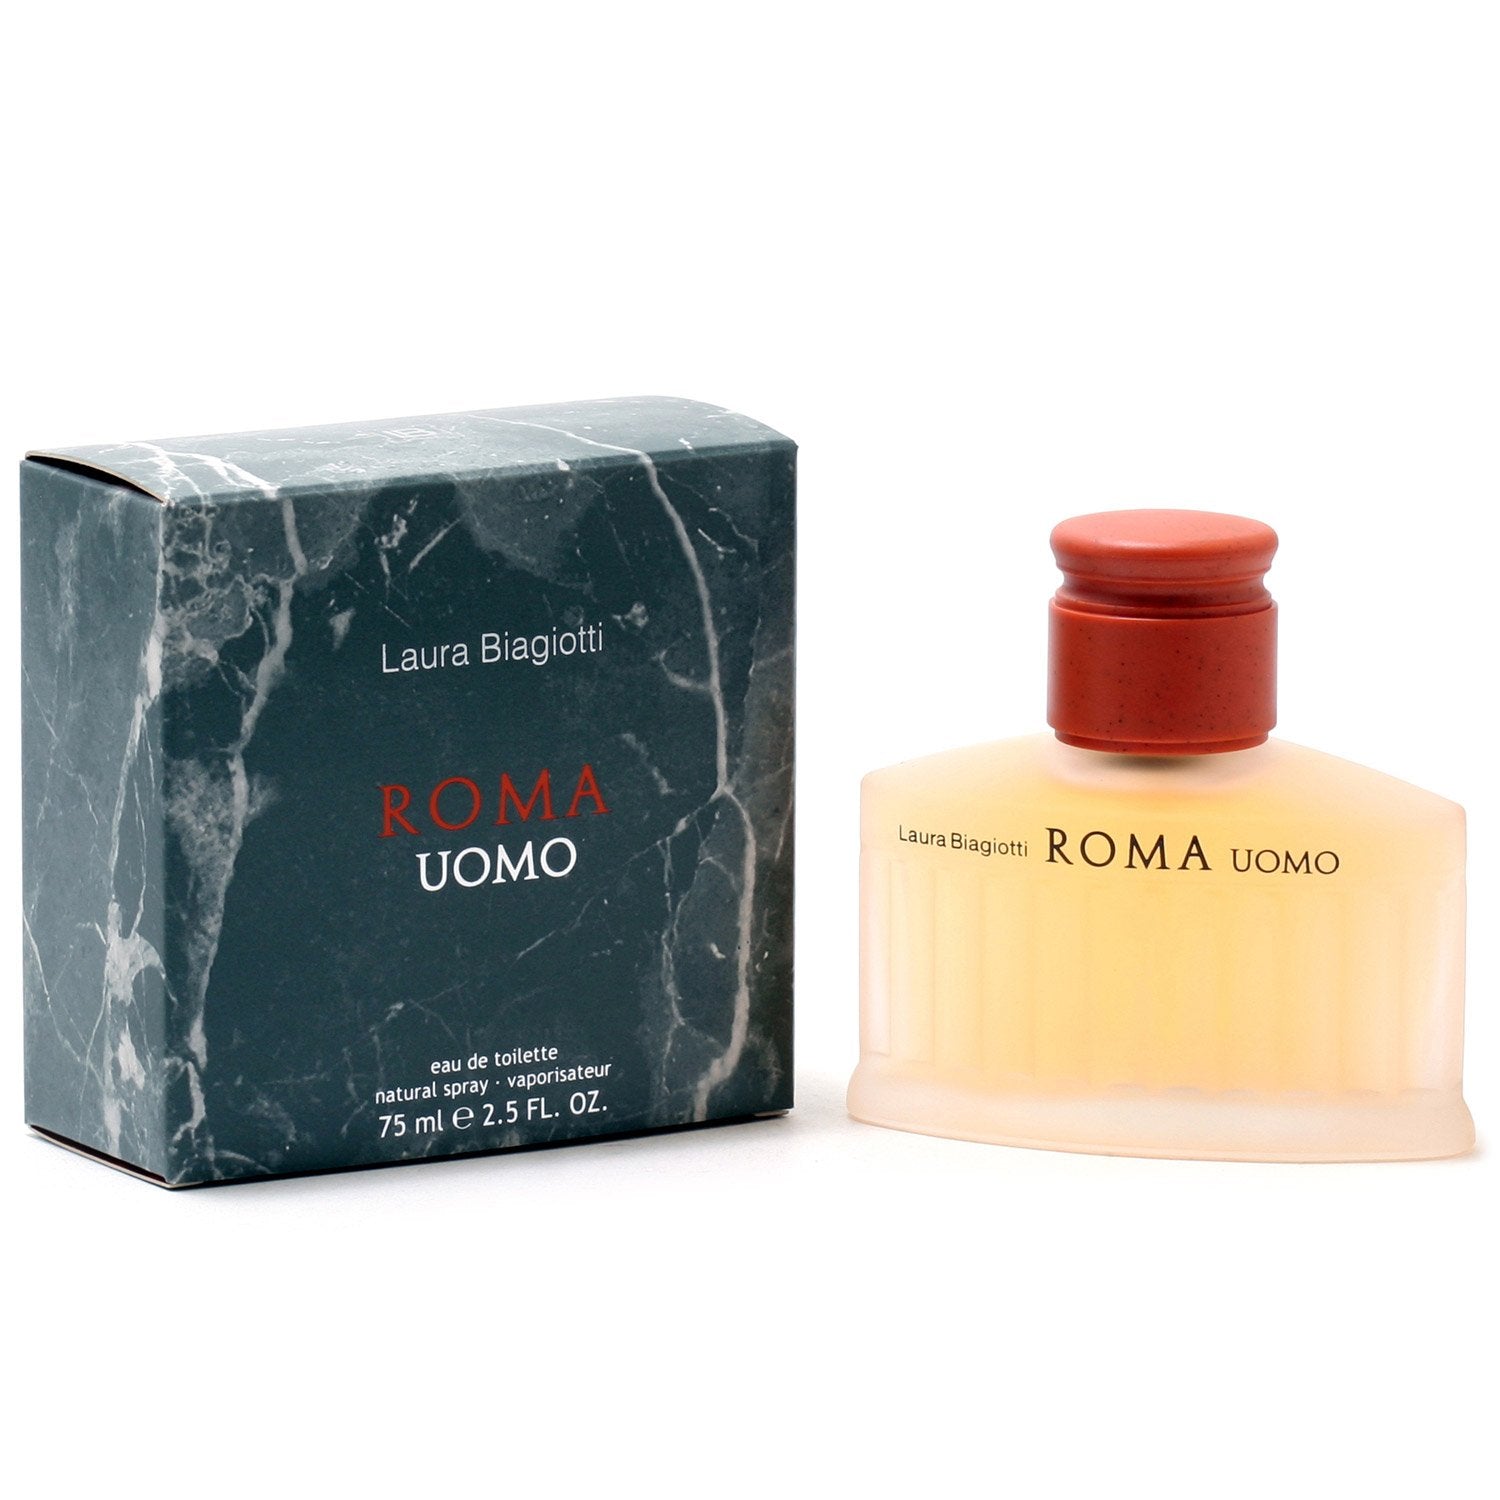 ROMA UOMO FOR MEN BY 2.5 DE SPRAY, – - Fragrance TOILETTE Room BIAGIOTTI OZ EAU LAURA